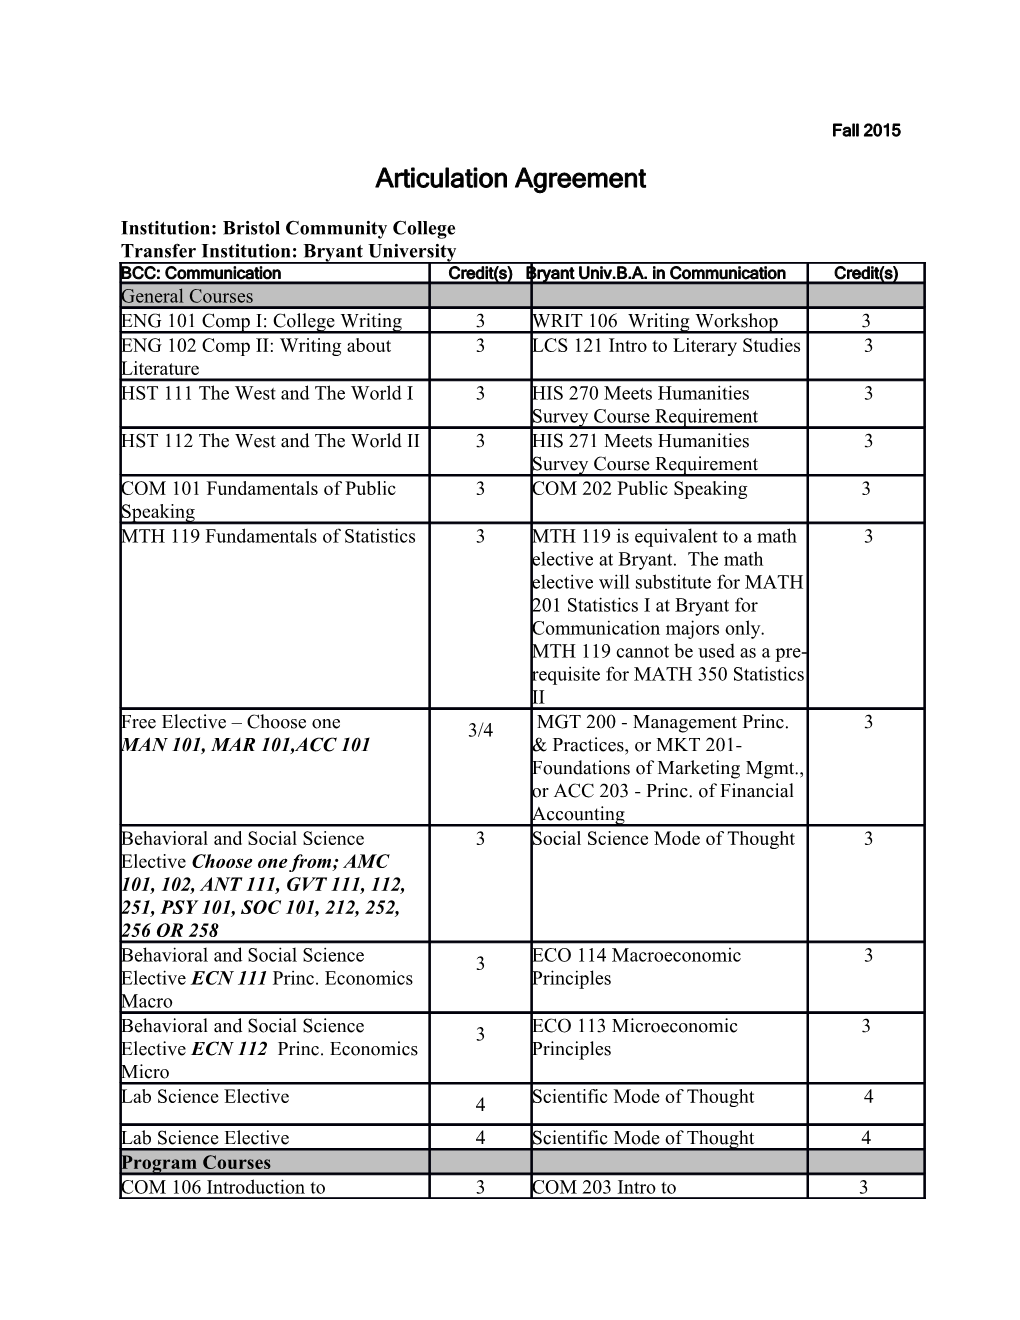 Articulation Agreement s1